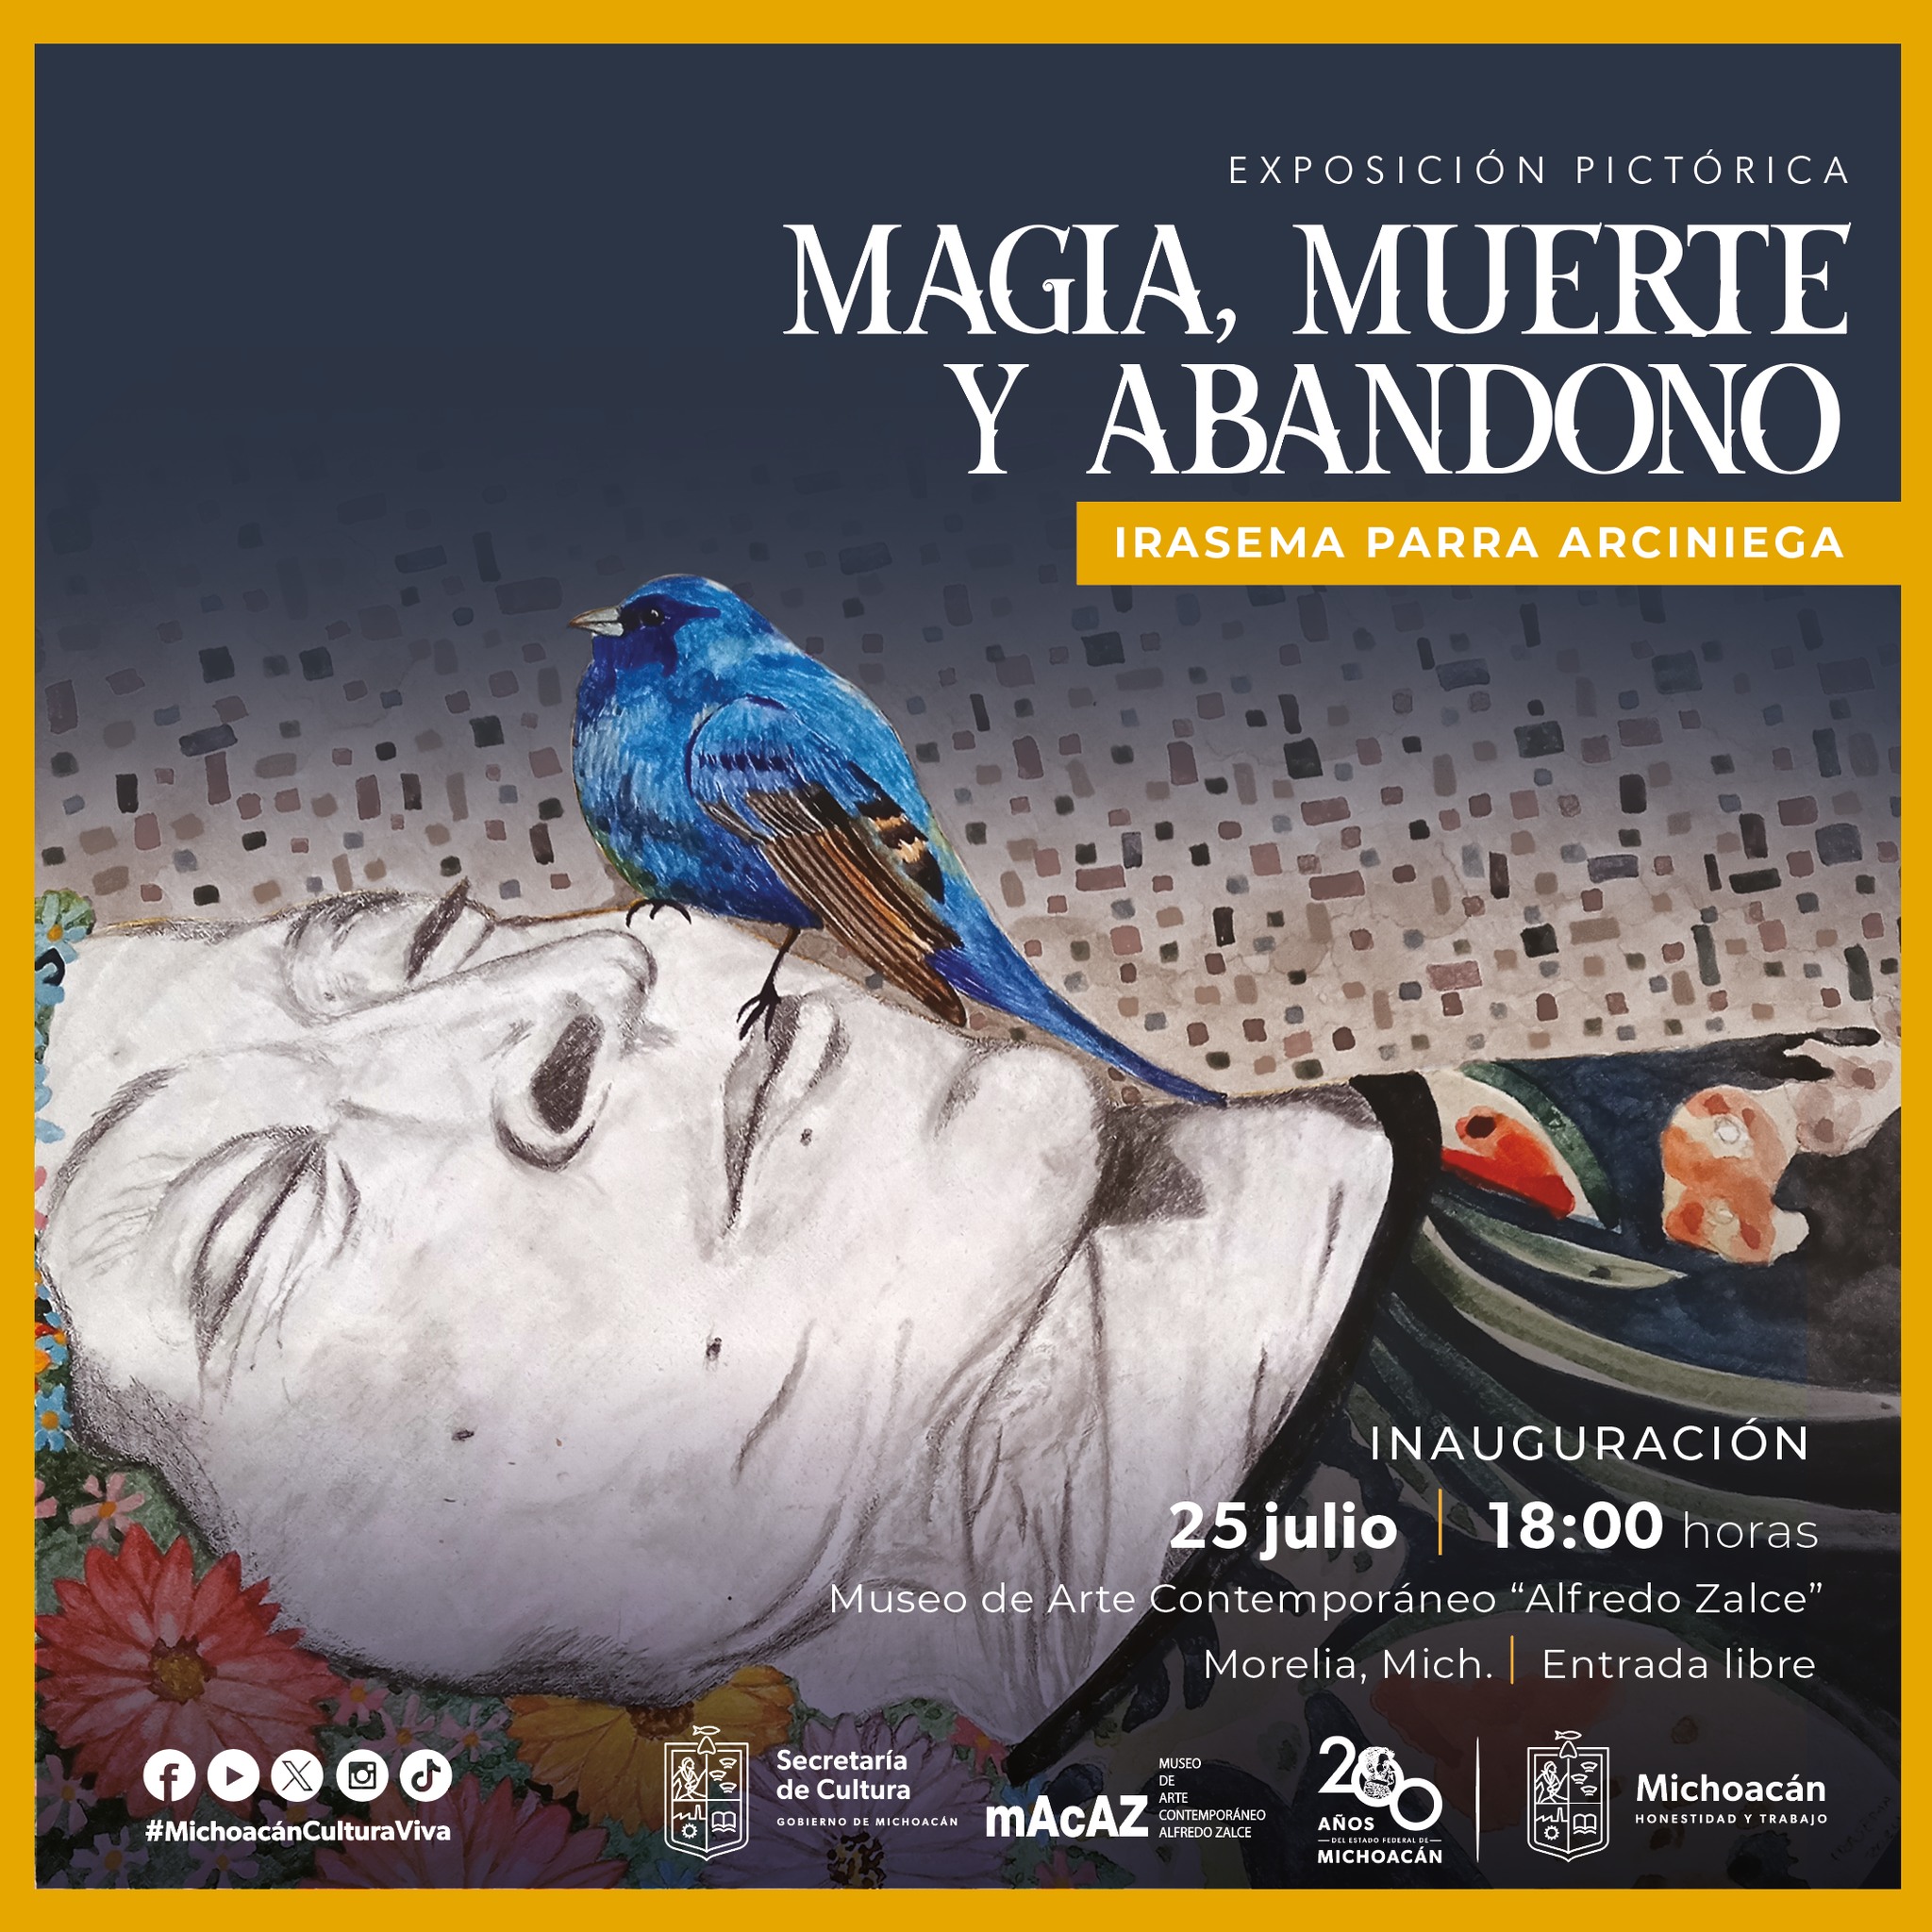 MACAZ estrenará exposiciones de artistas michoacanas Celeste Jaime e Irasema Parra